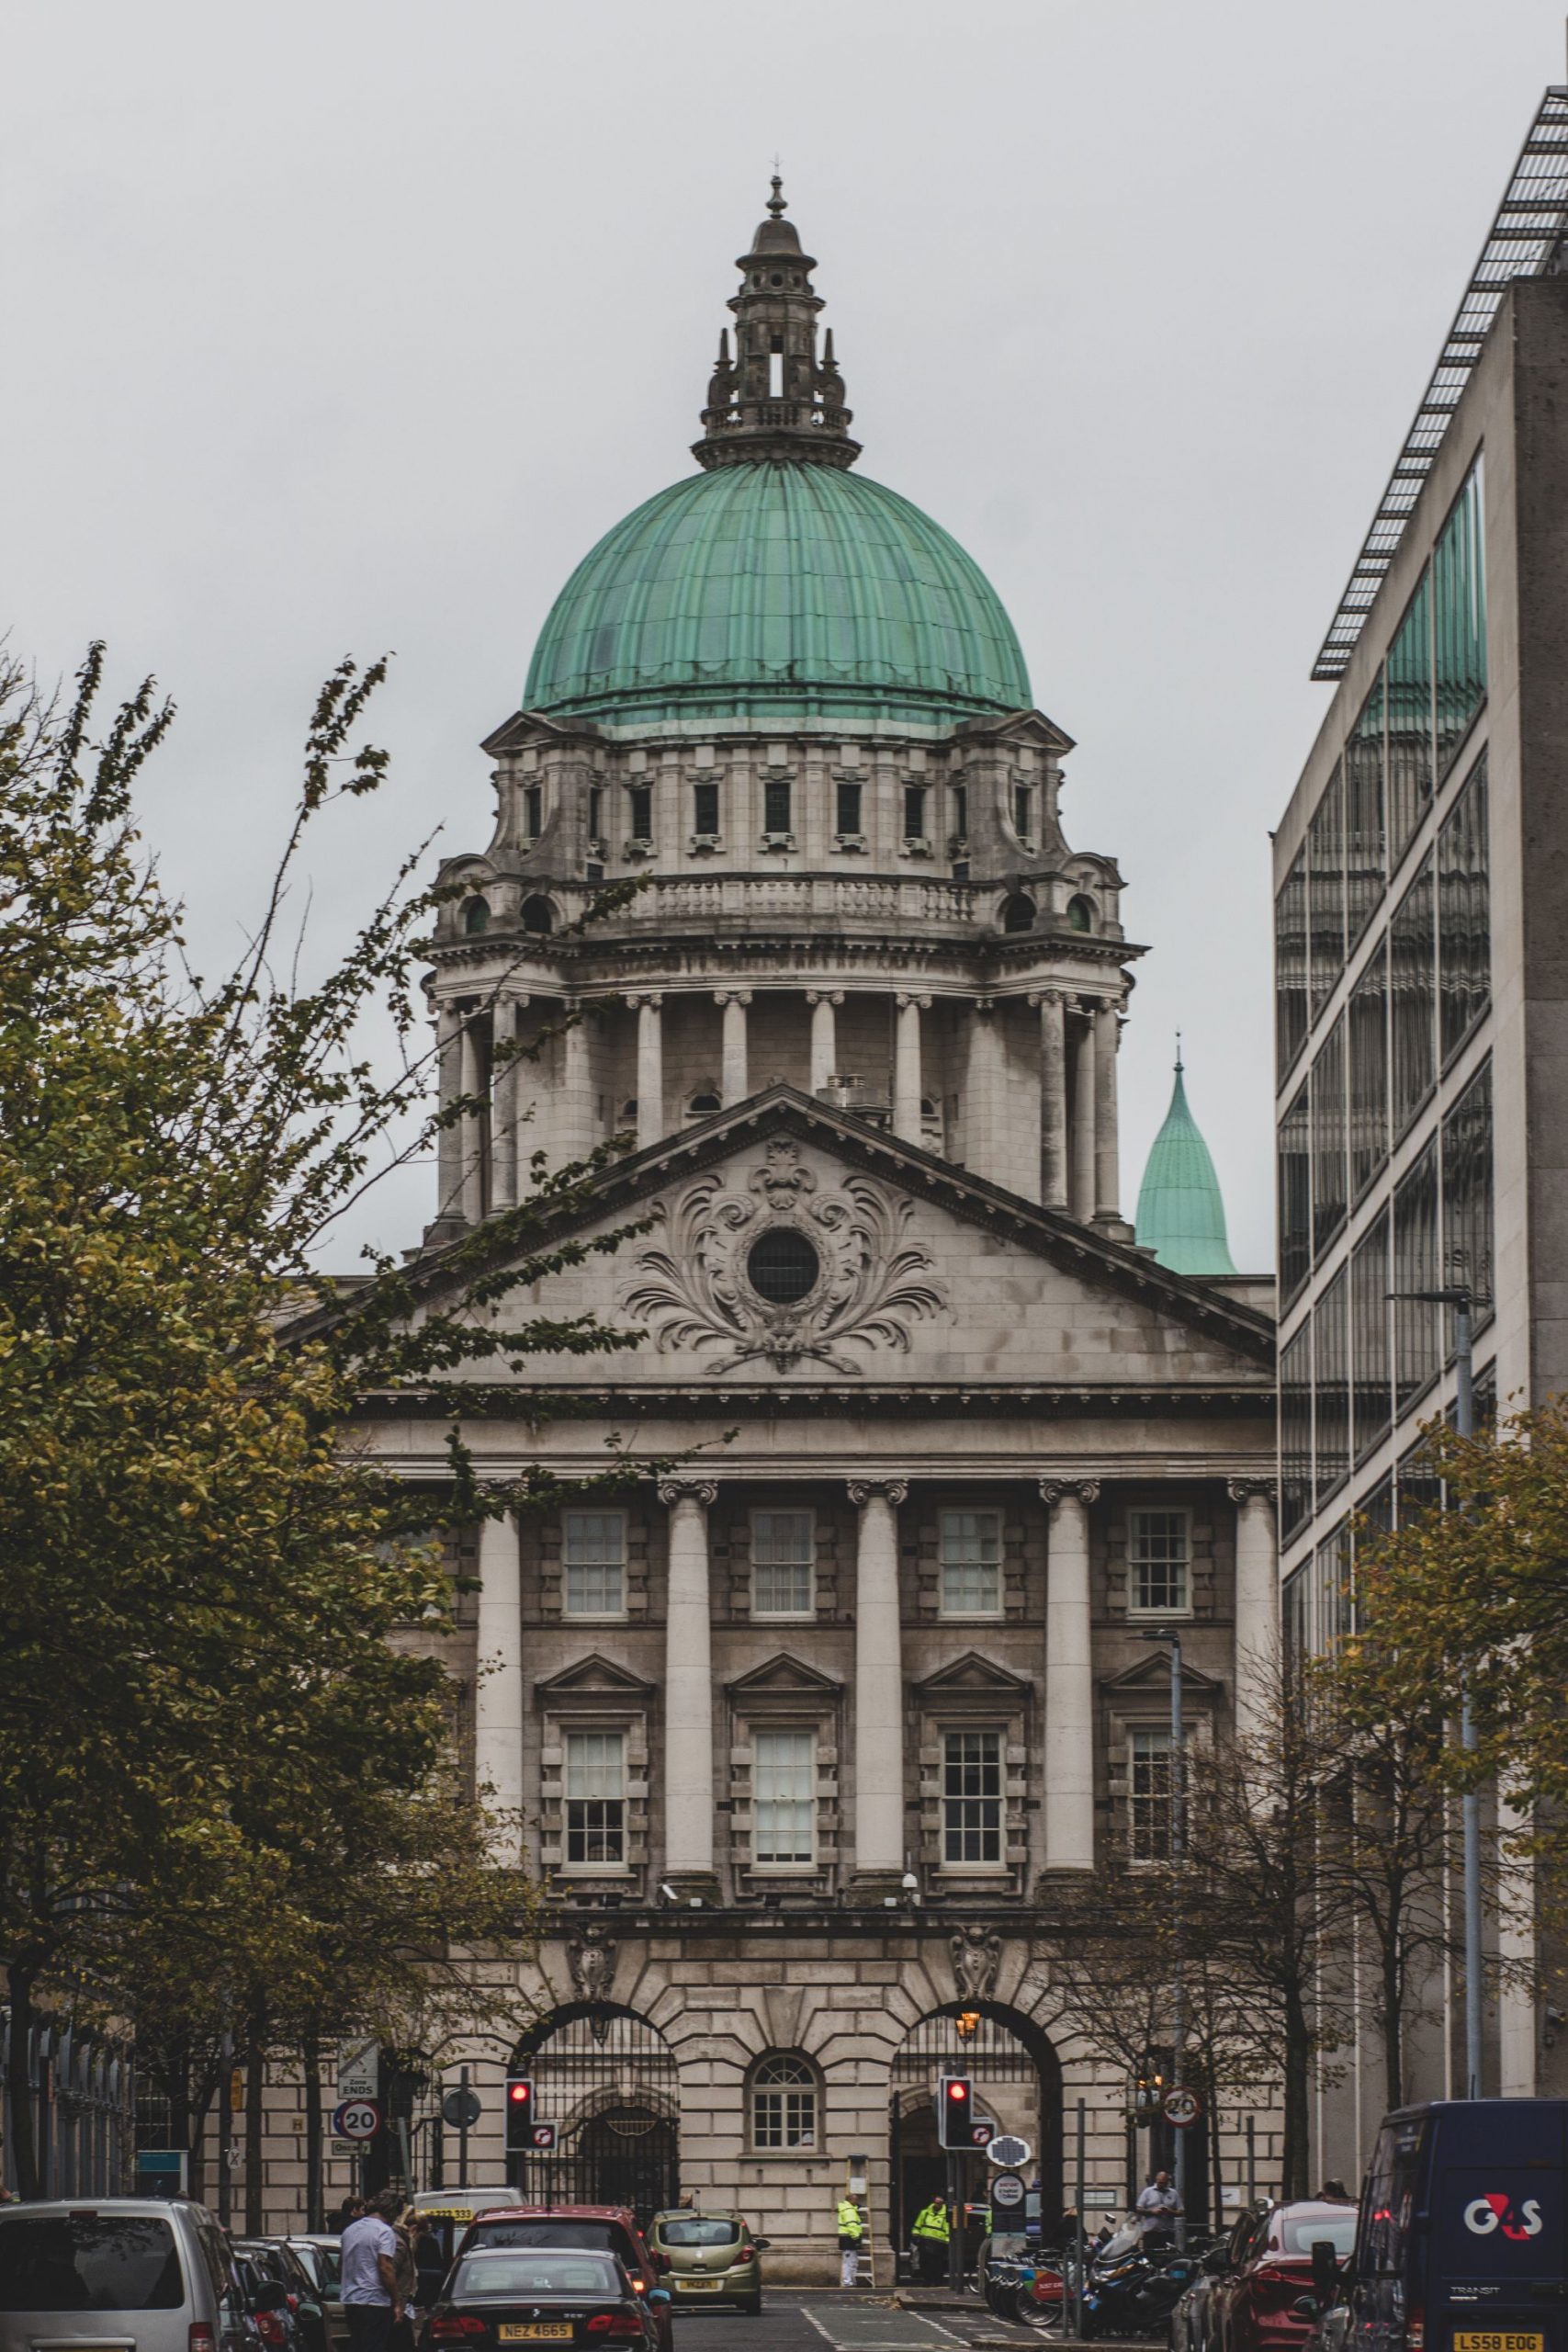 Belfast City Hall